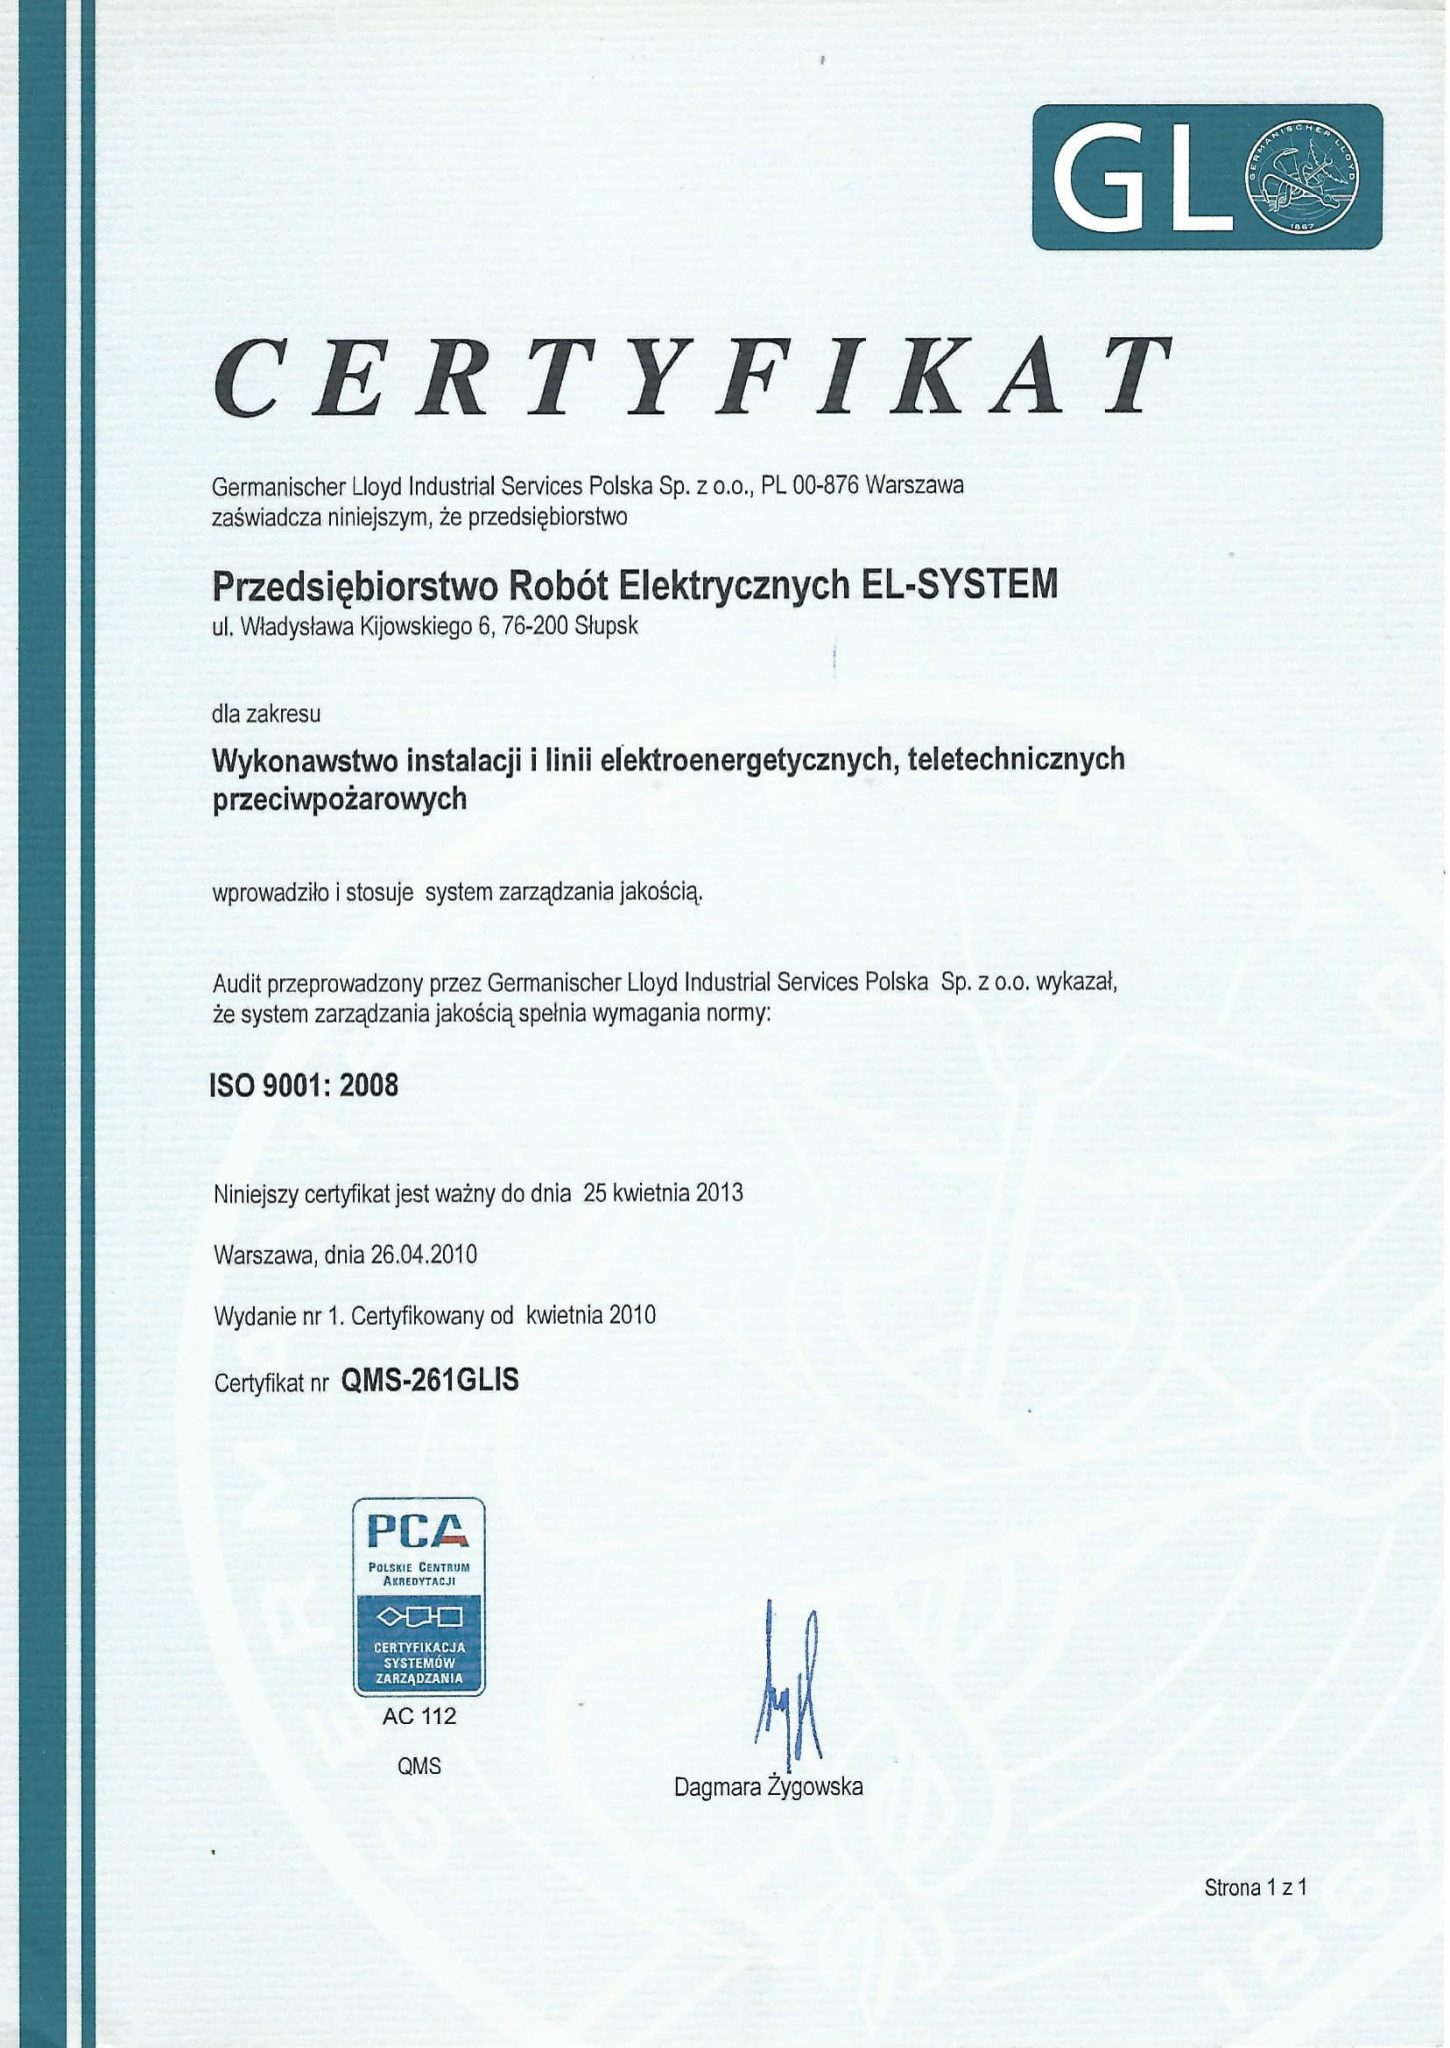 Certyfikat-ISO-9001-2008-Polski-1-1450x2048